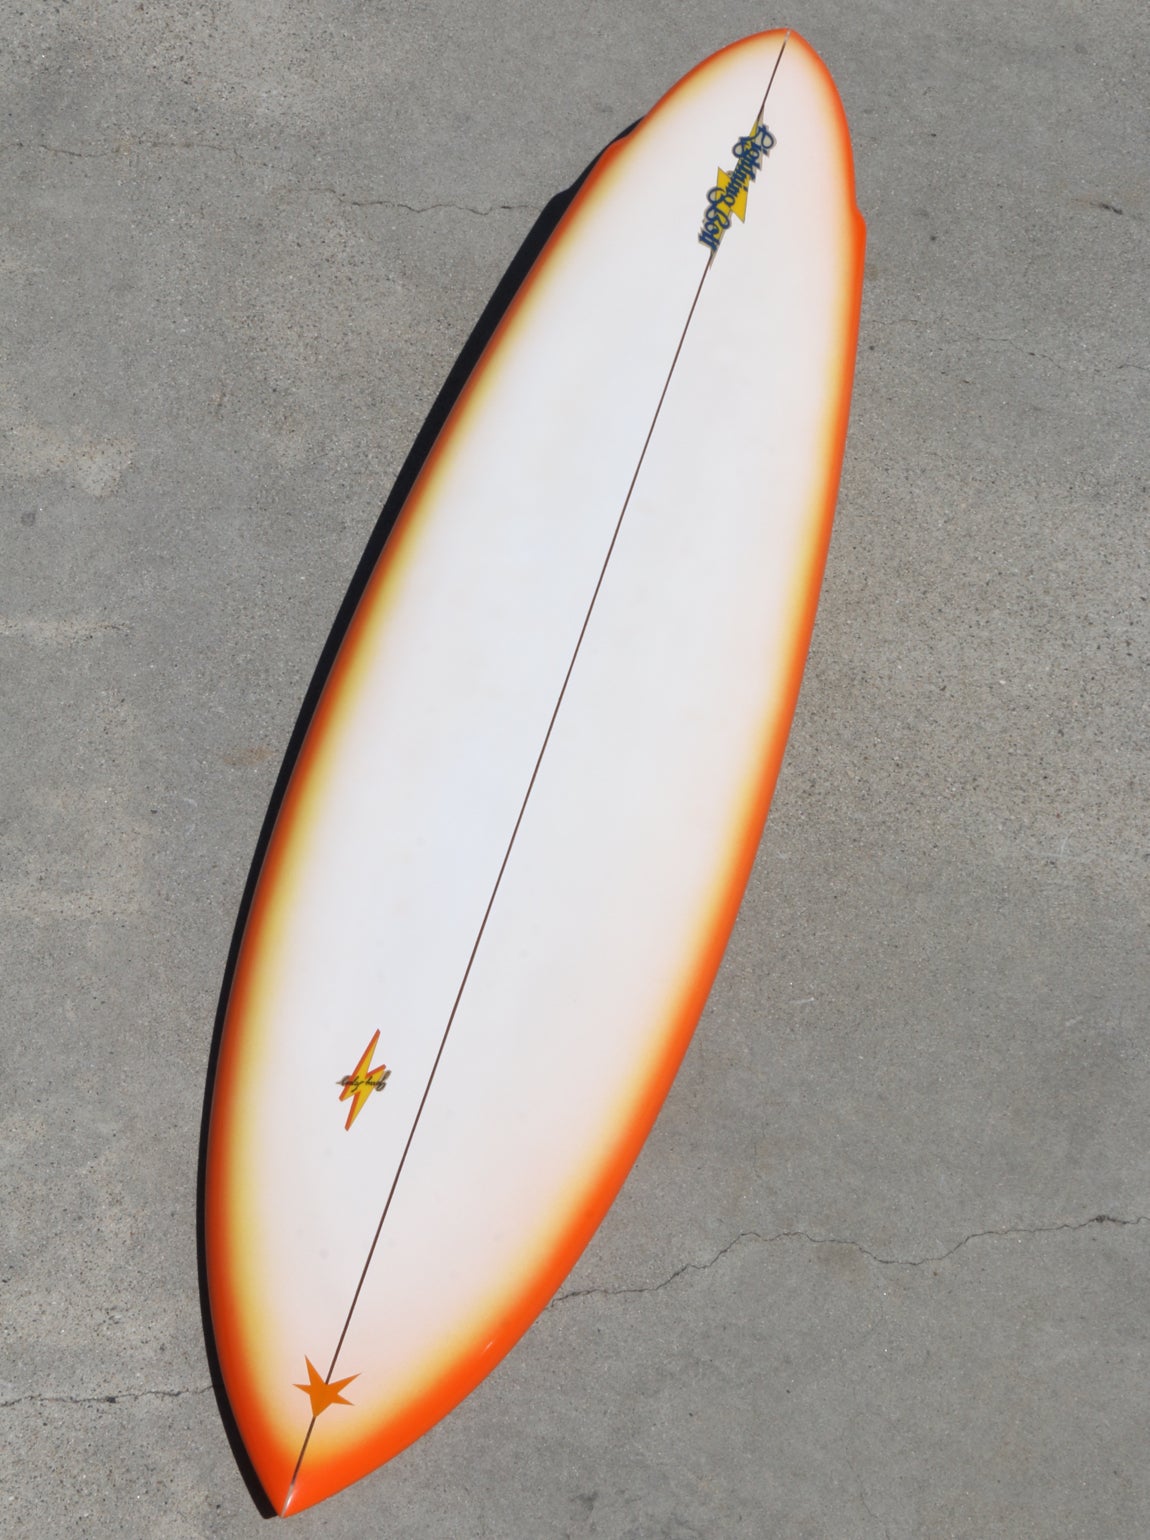 Mid-Century Modern Orange Terry Martin Shaped George Lopez Lightning Bolt Pintail Surfboard 1970s